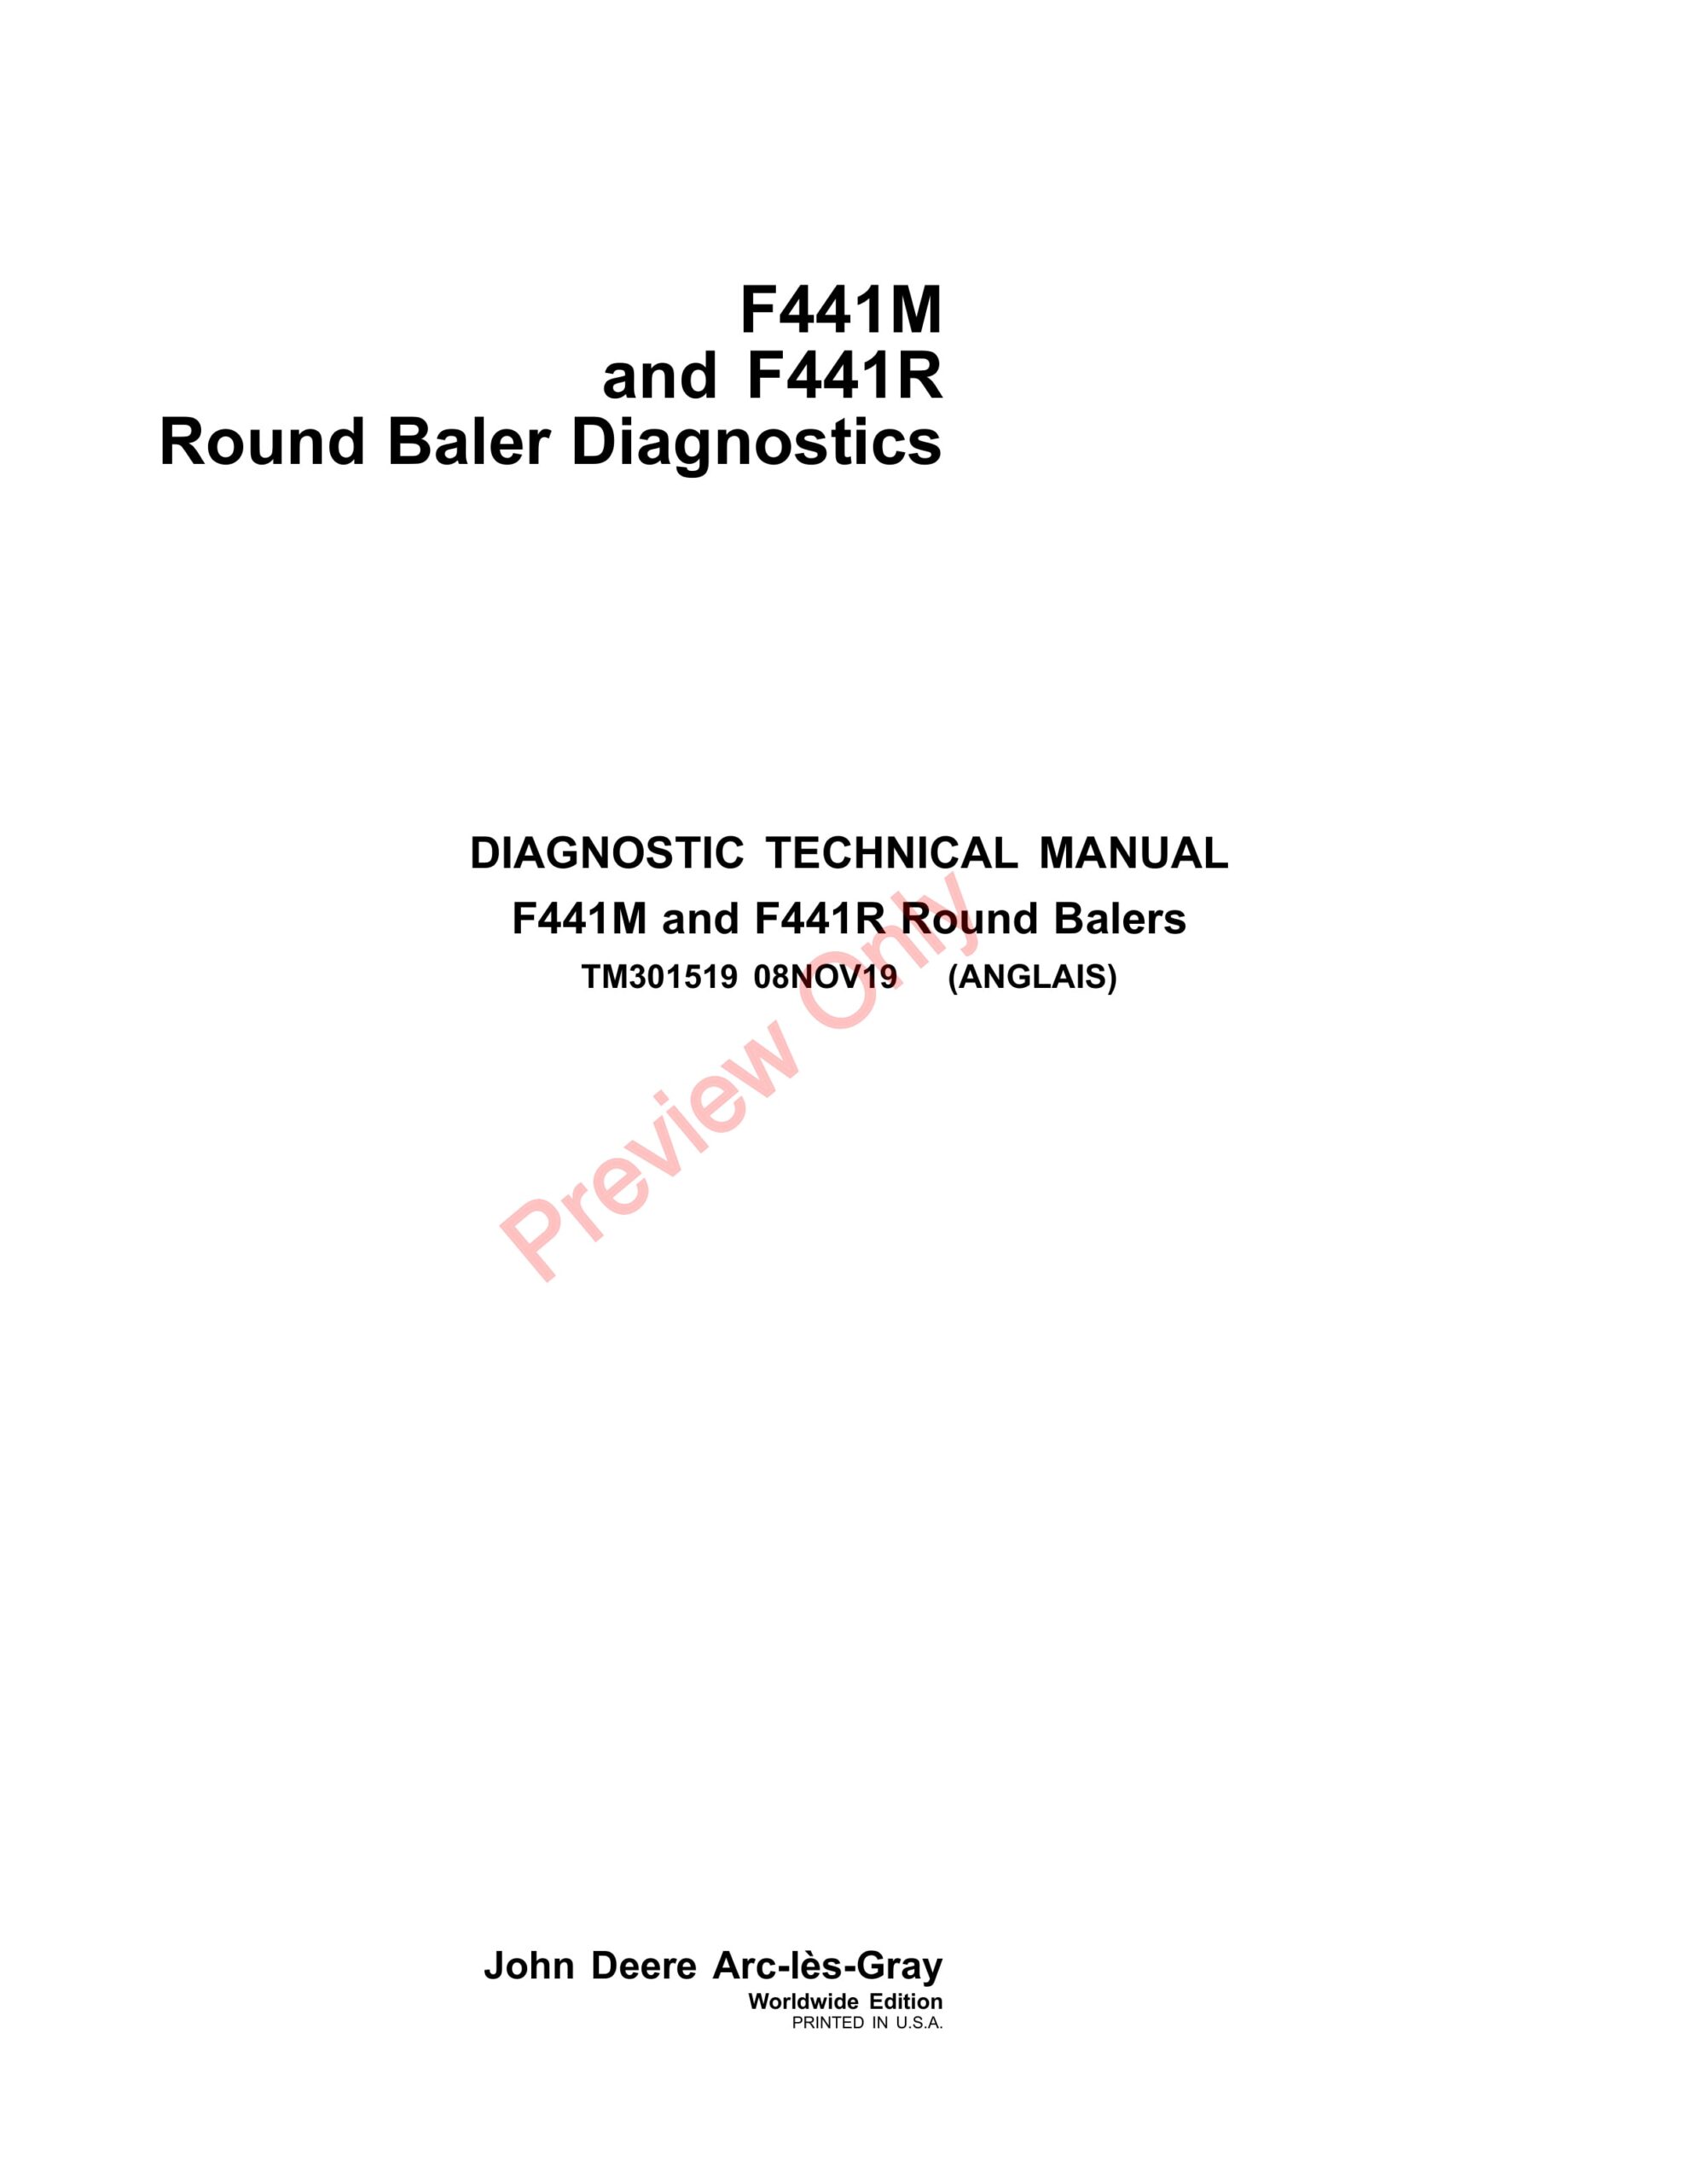 John Deere F441M and F441R Round Balers Technical Manual TM301519 08NOV19-1